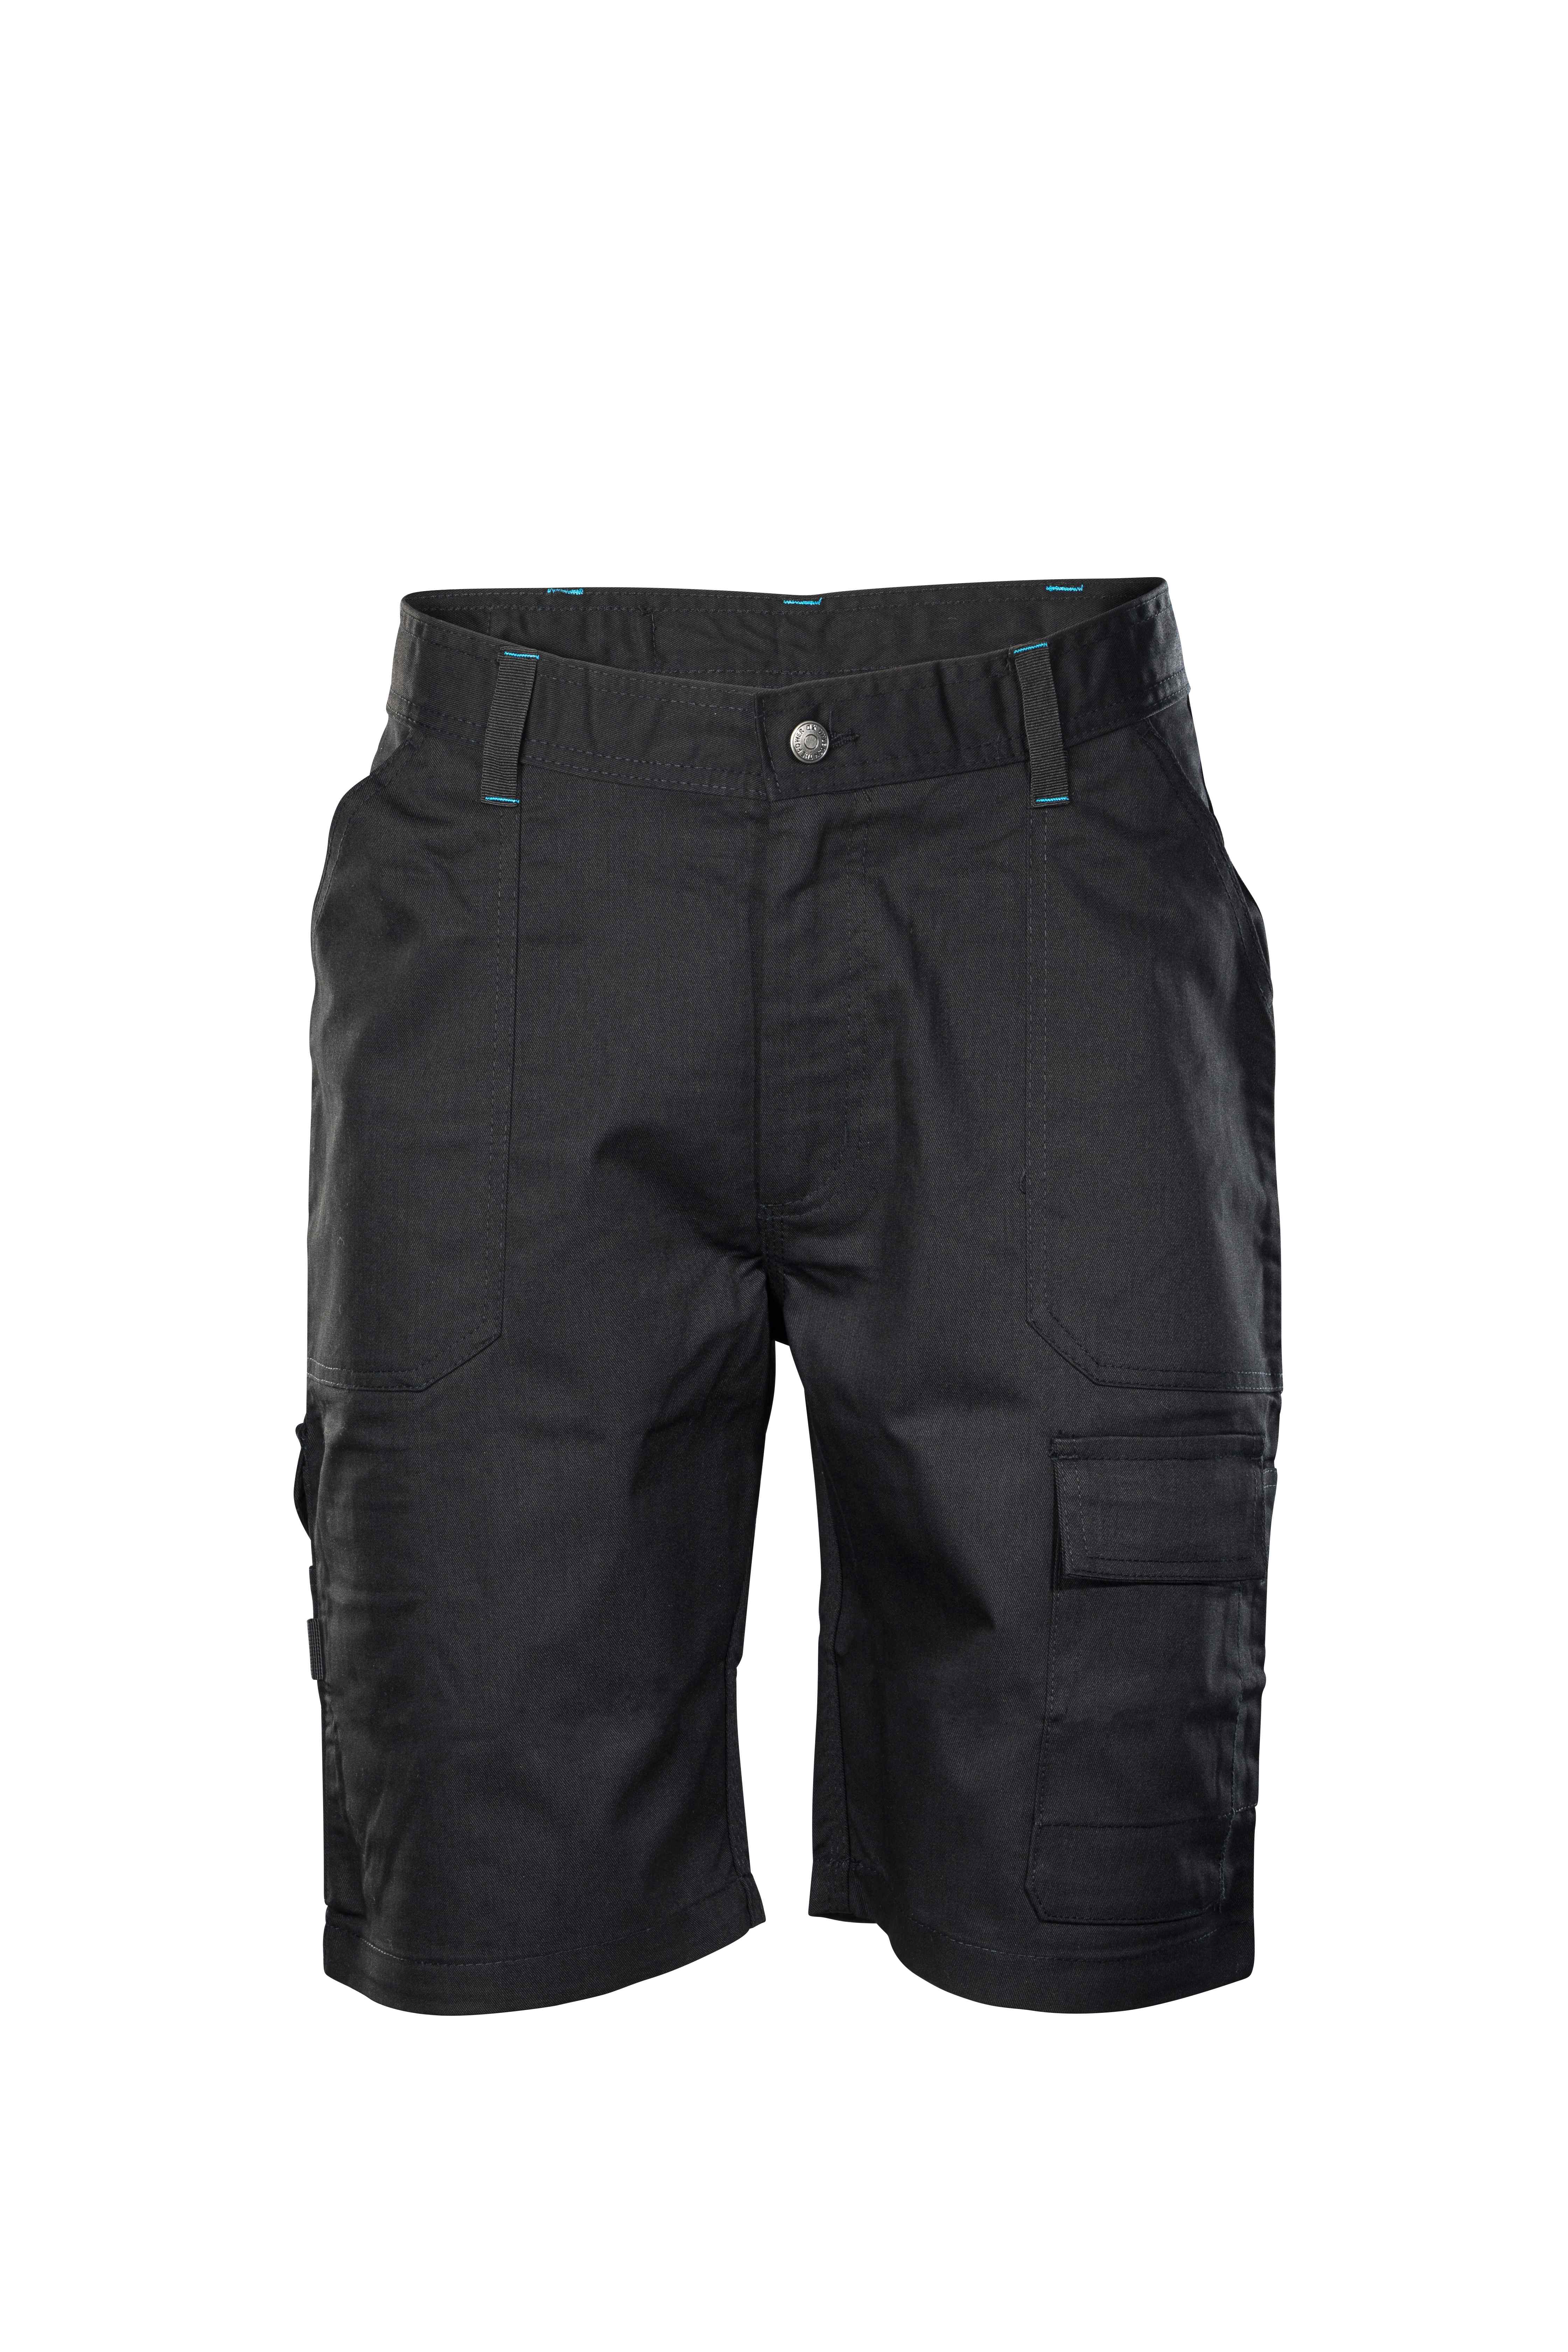 OX Multi Pocket Trade Shorts 36